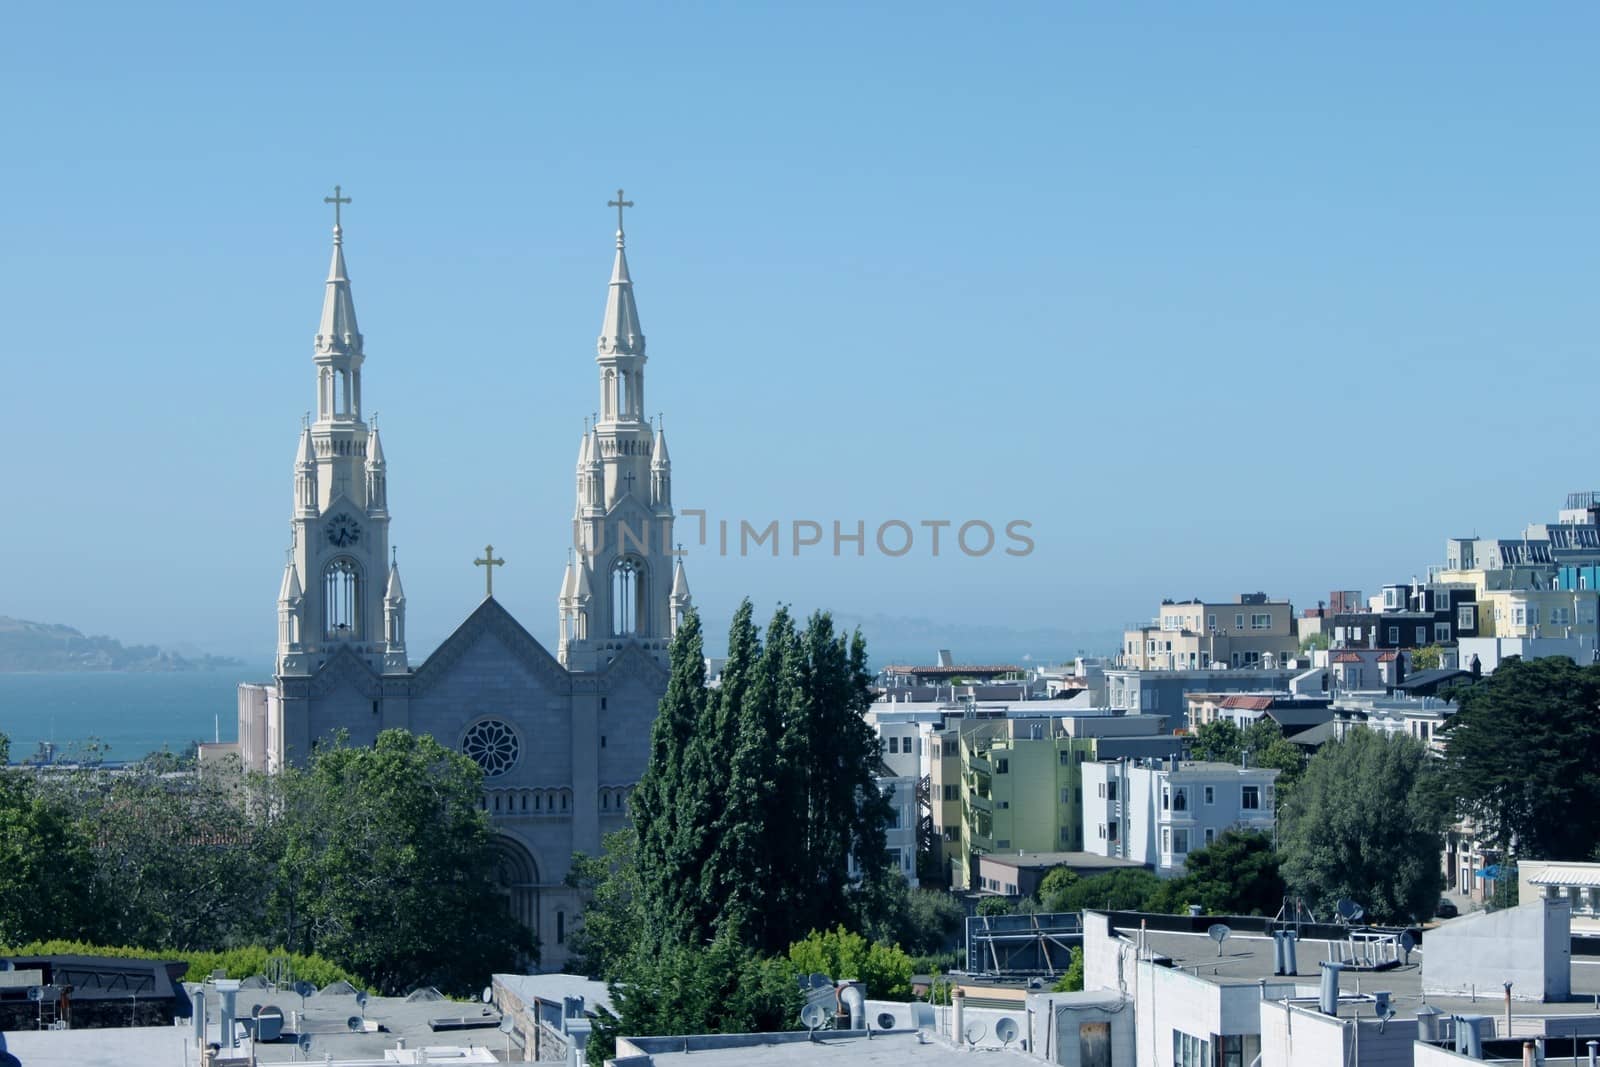 Saints Peter and Paul Church in San Francisco